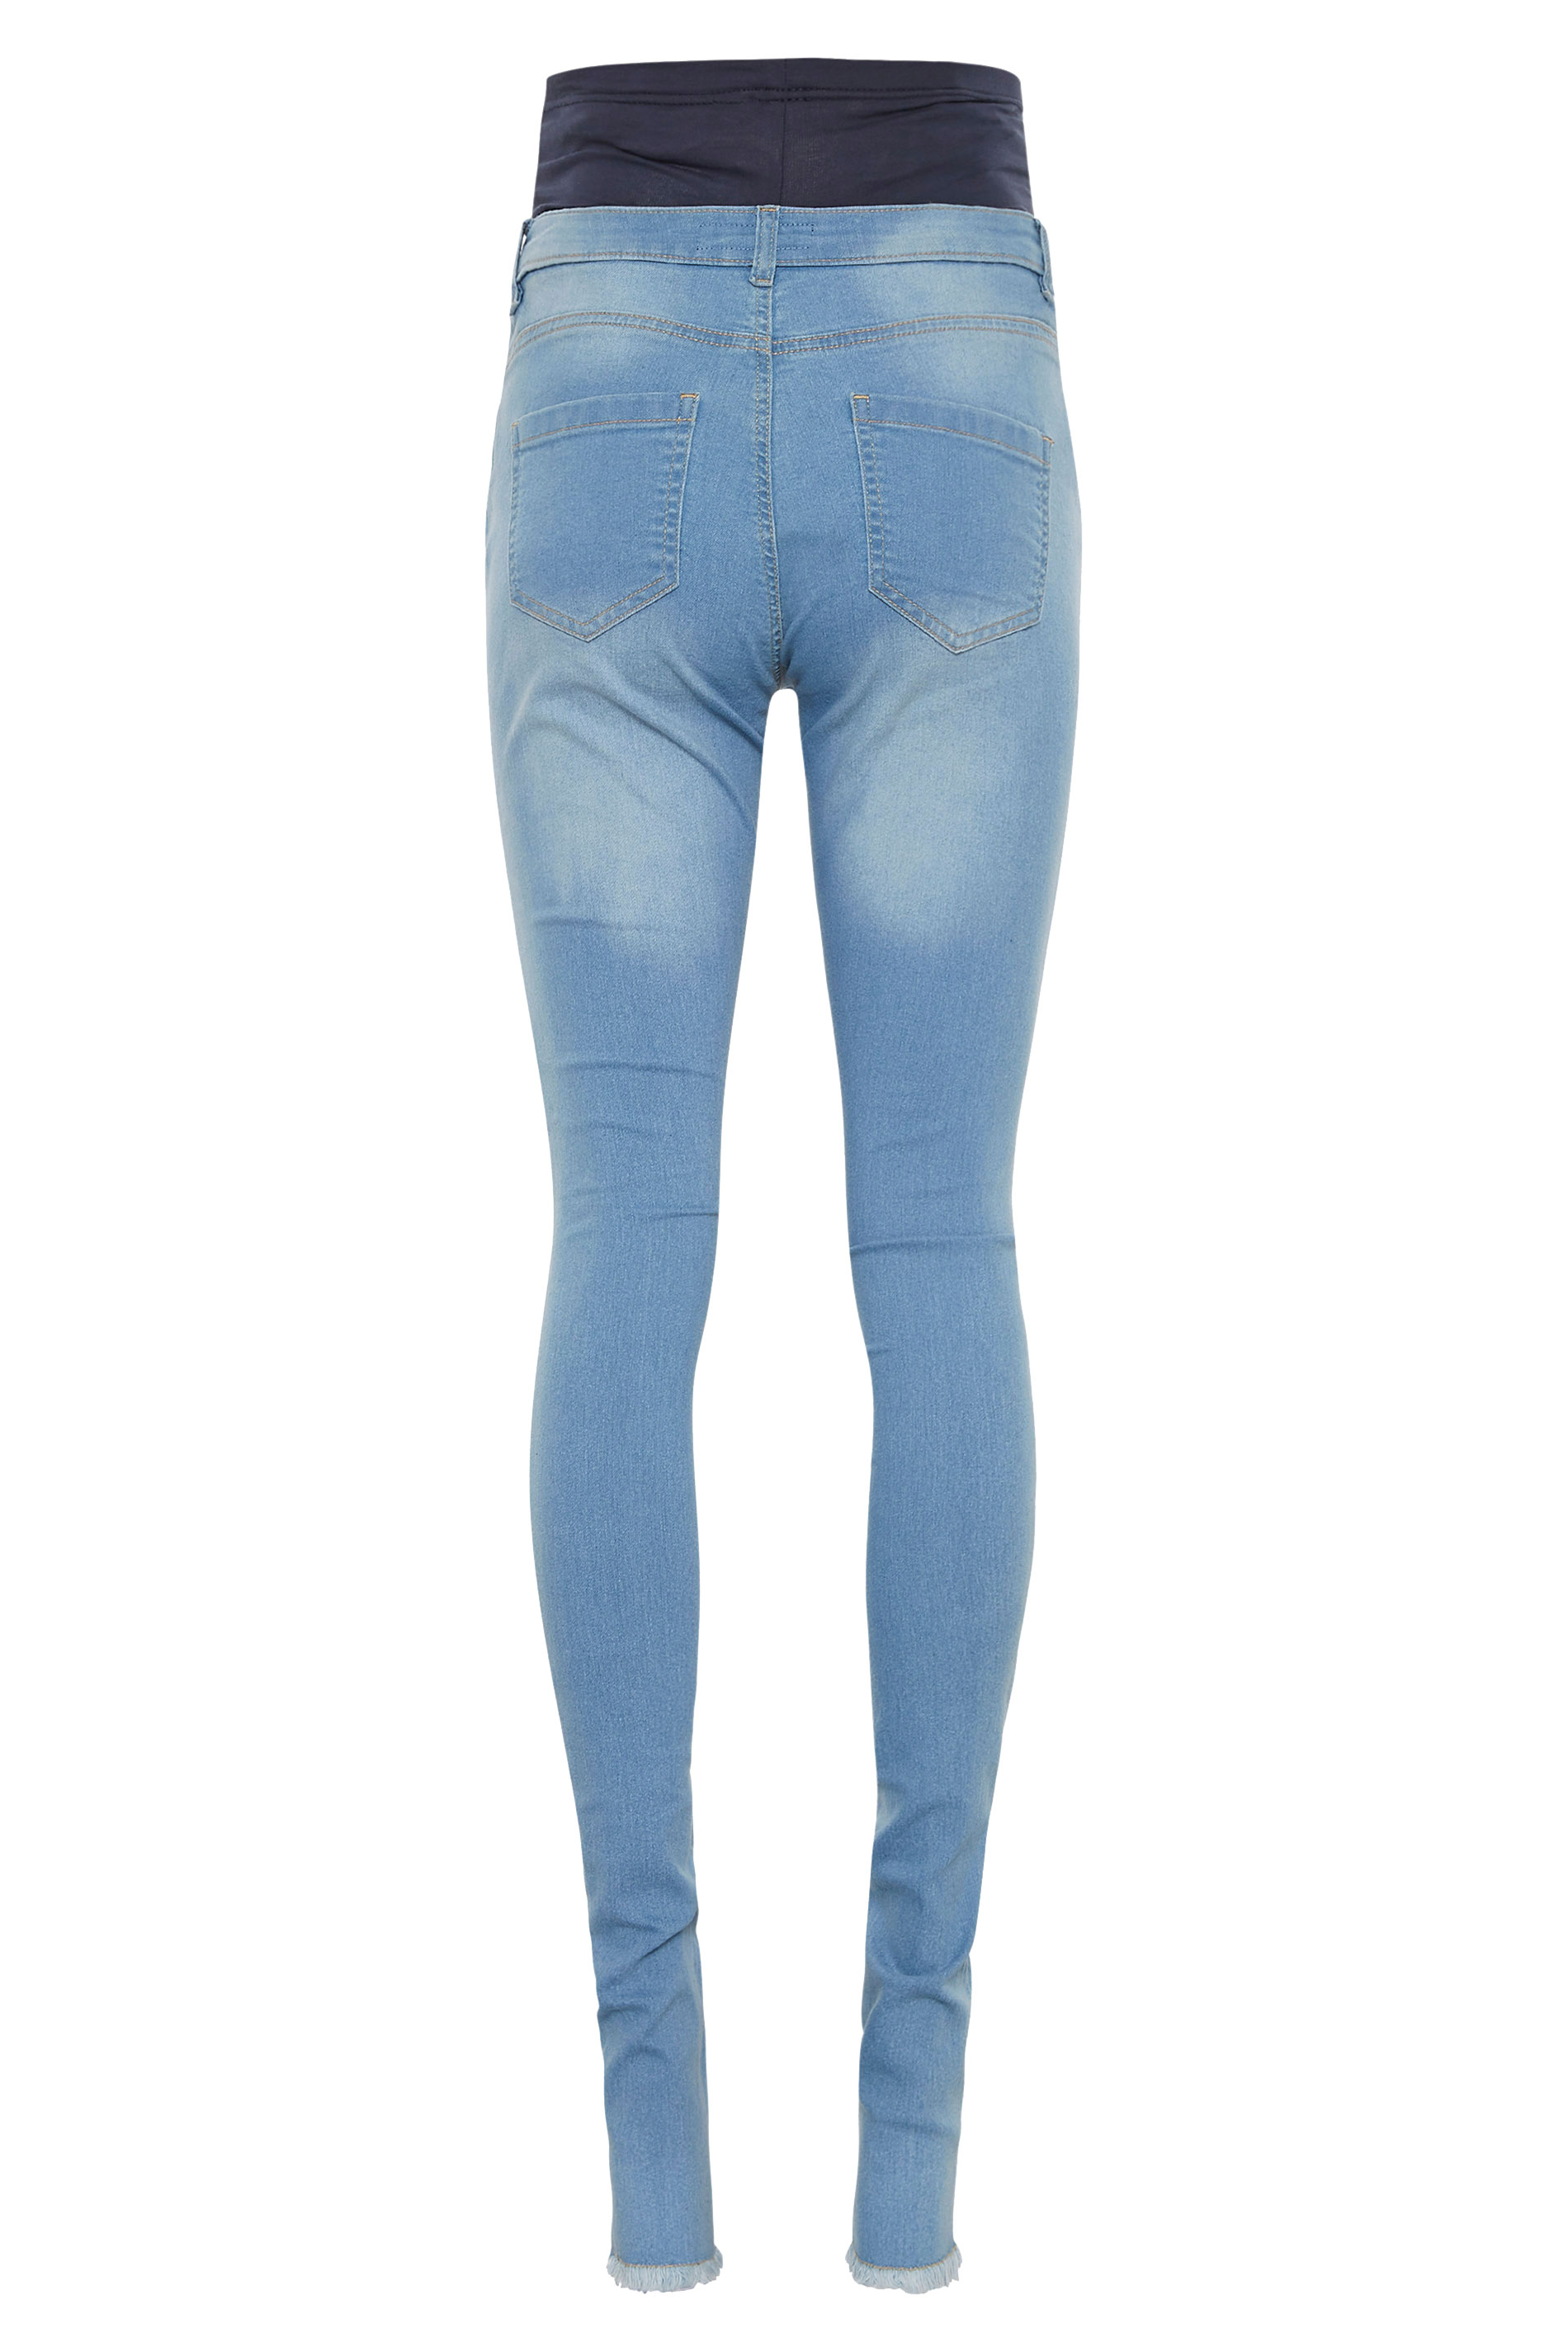 Tall Women's LTS Maternity Blue Distressed Skinny Jeans